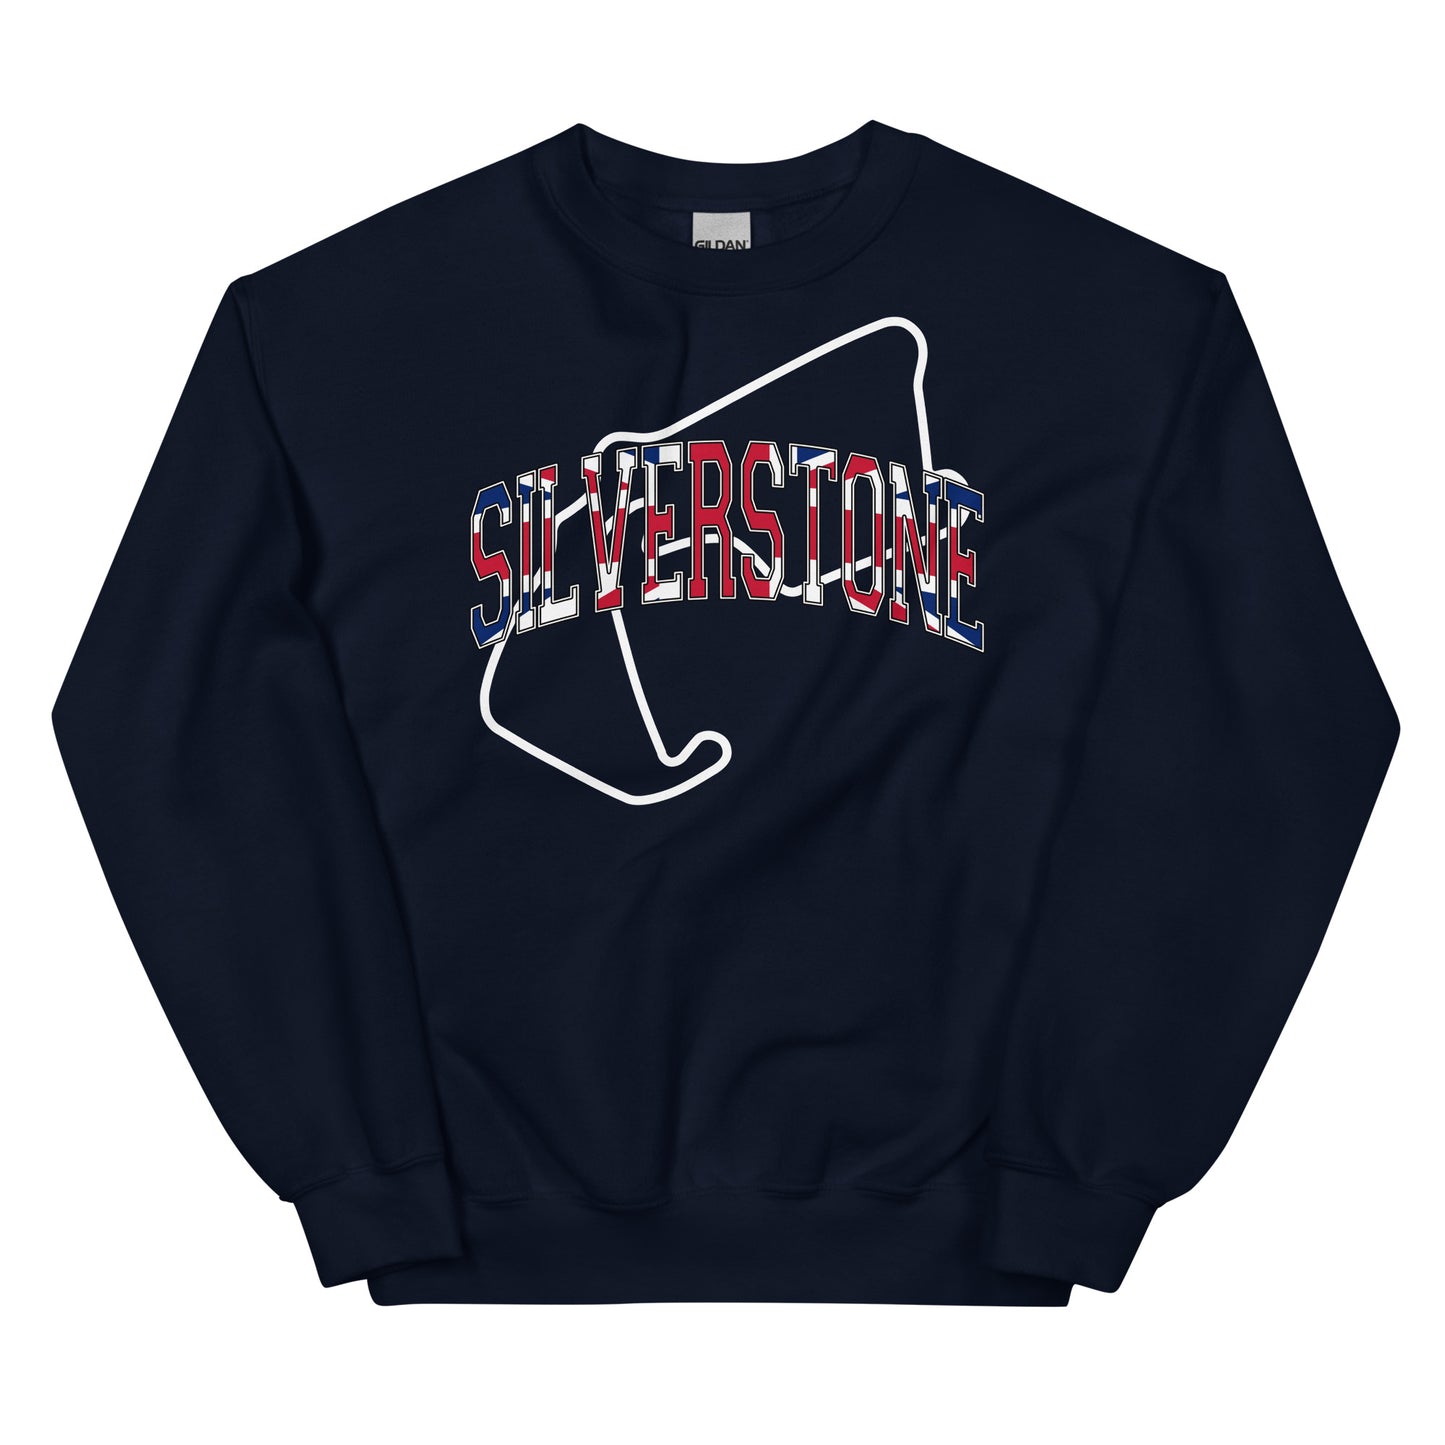 Silverstone Trackside Sweatshirt - Navy